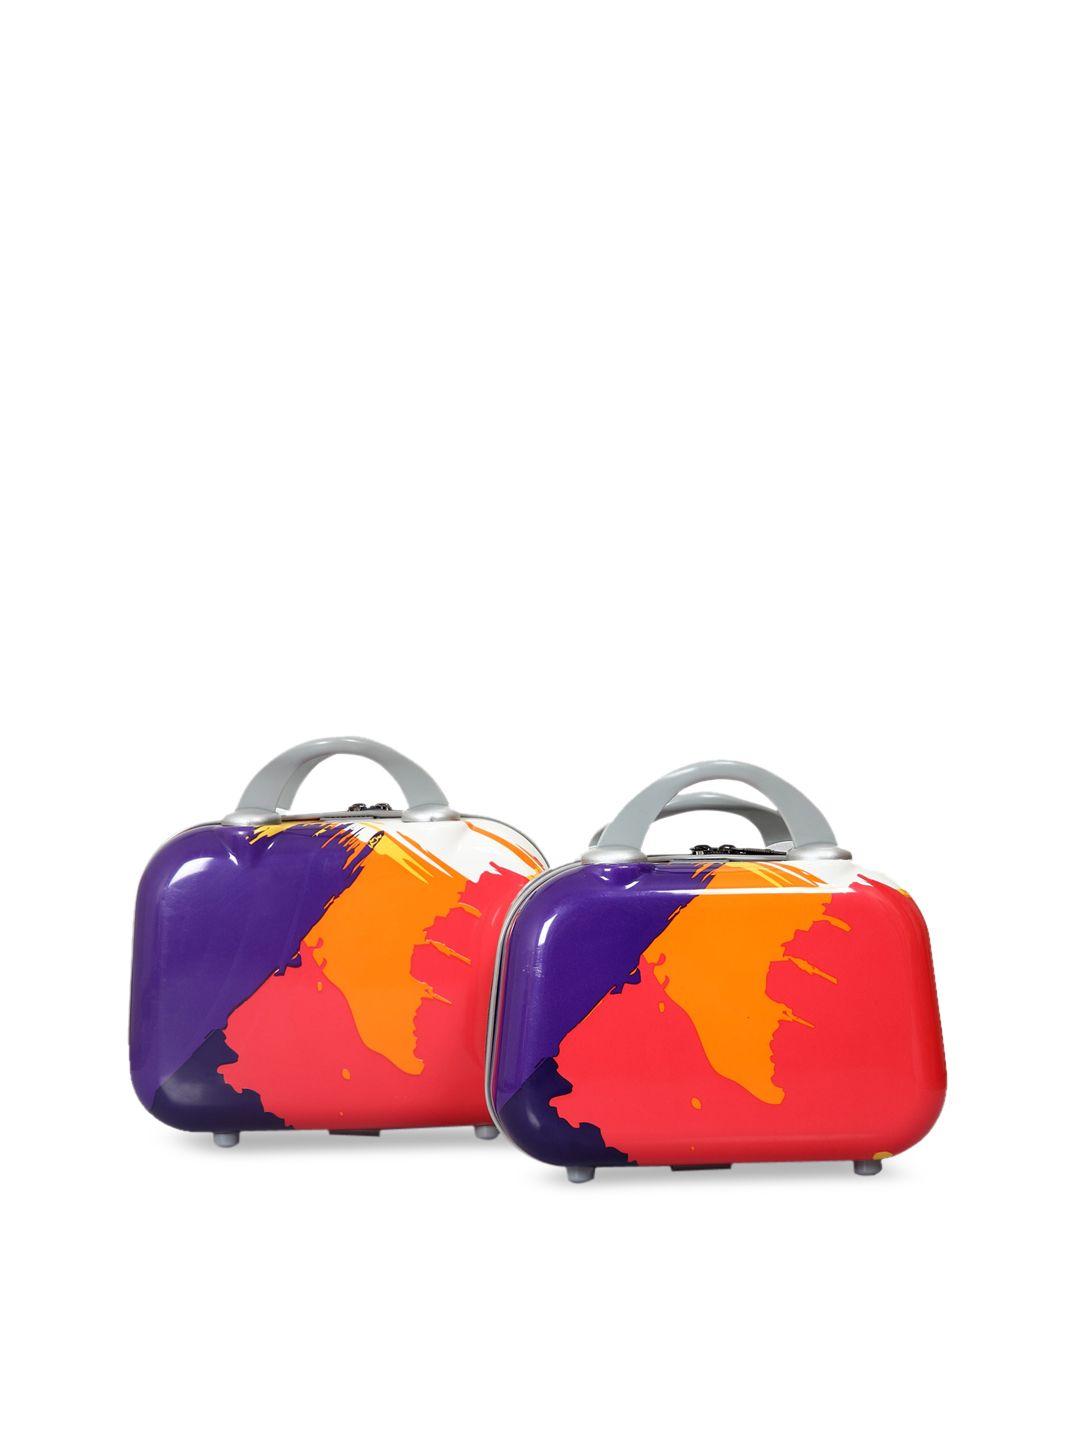 polo class orange & blue 2pc set travel vanity bag